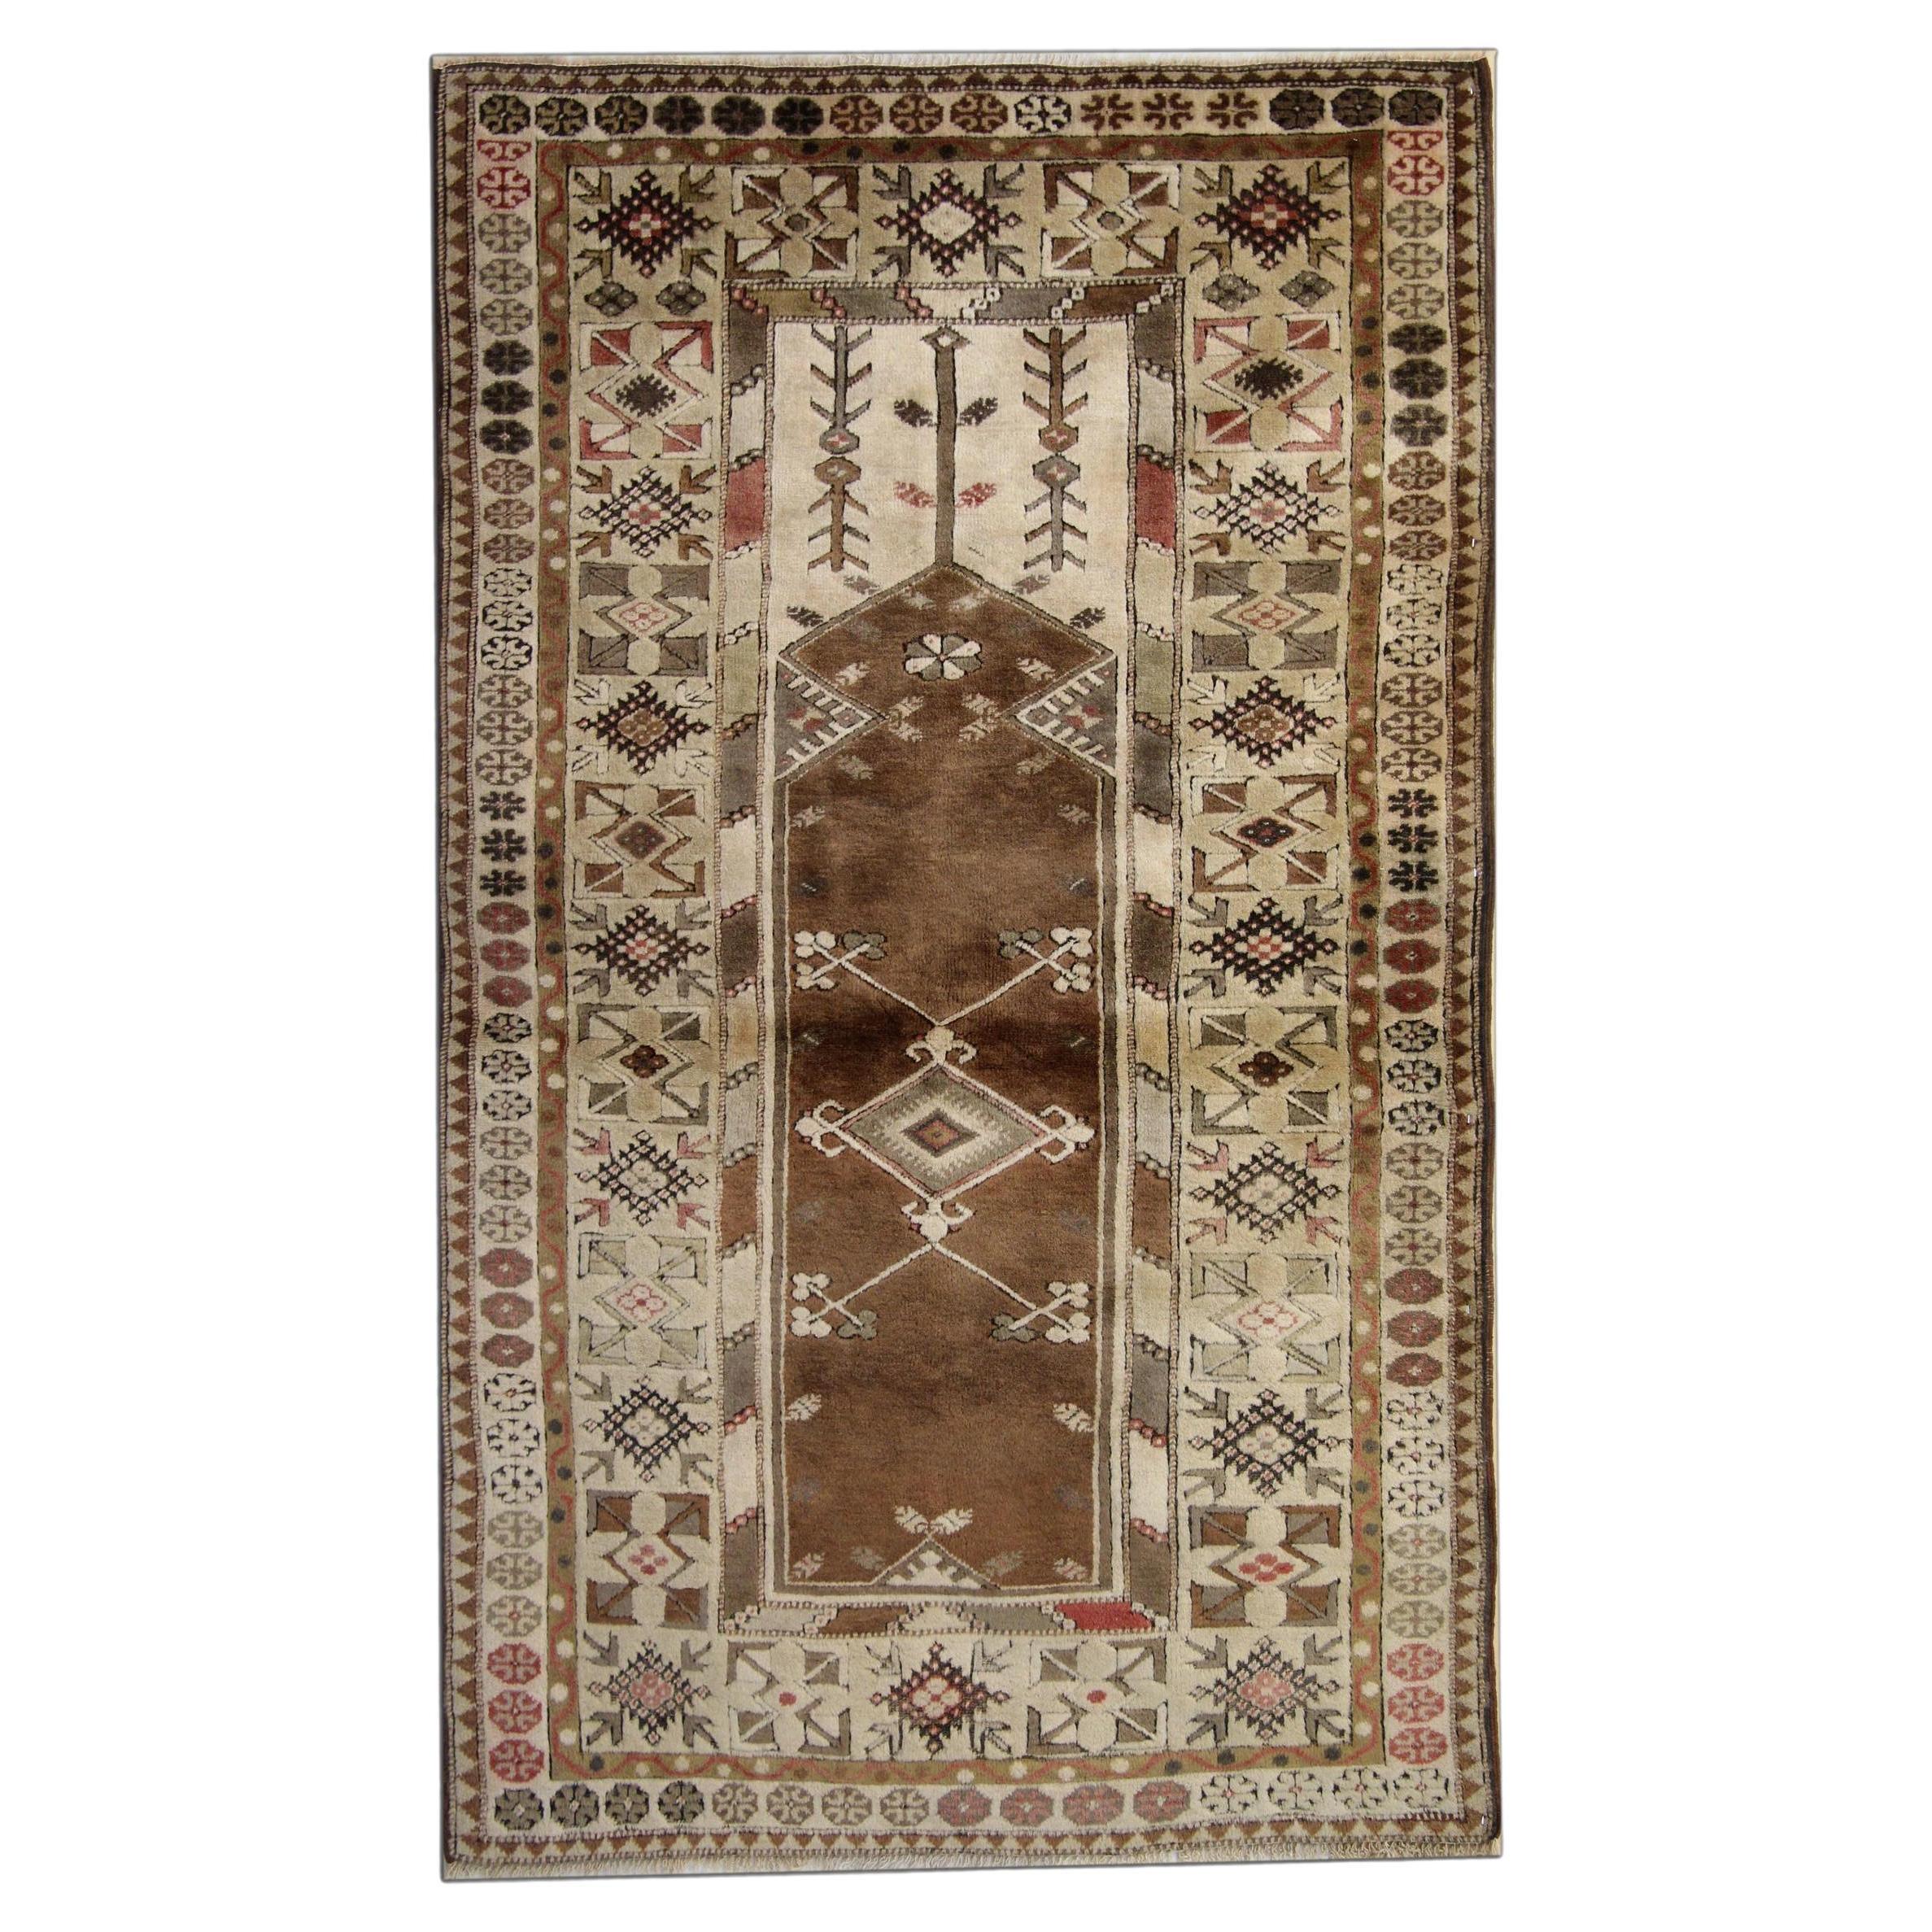 Antique Turkish Rugs, Vintage Rug Milas, Brown Rug, Handmade Carpet  For Sale